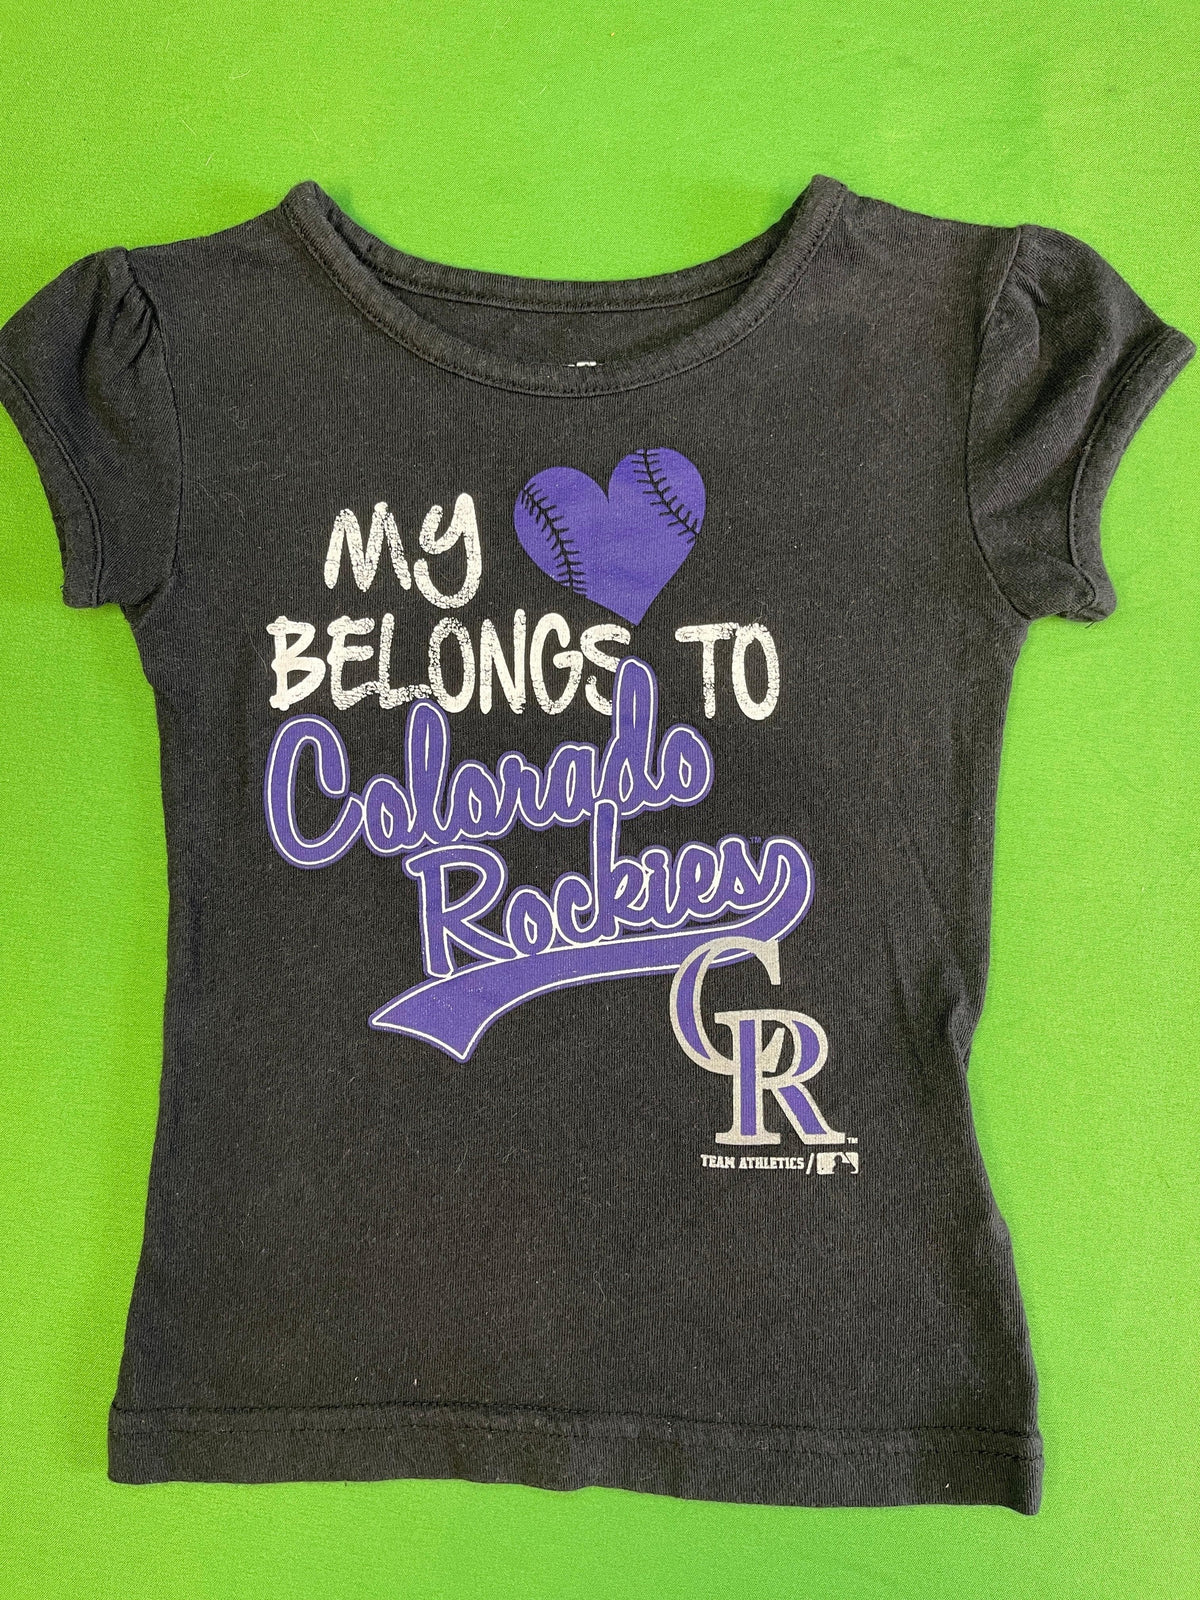 MLB Colorado Rockies Girls Black T-shirt Toddler 2T